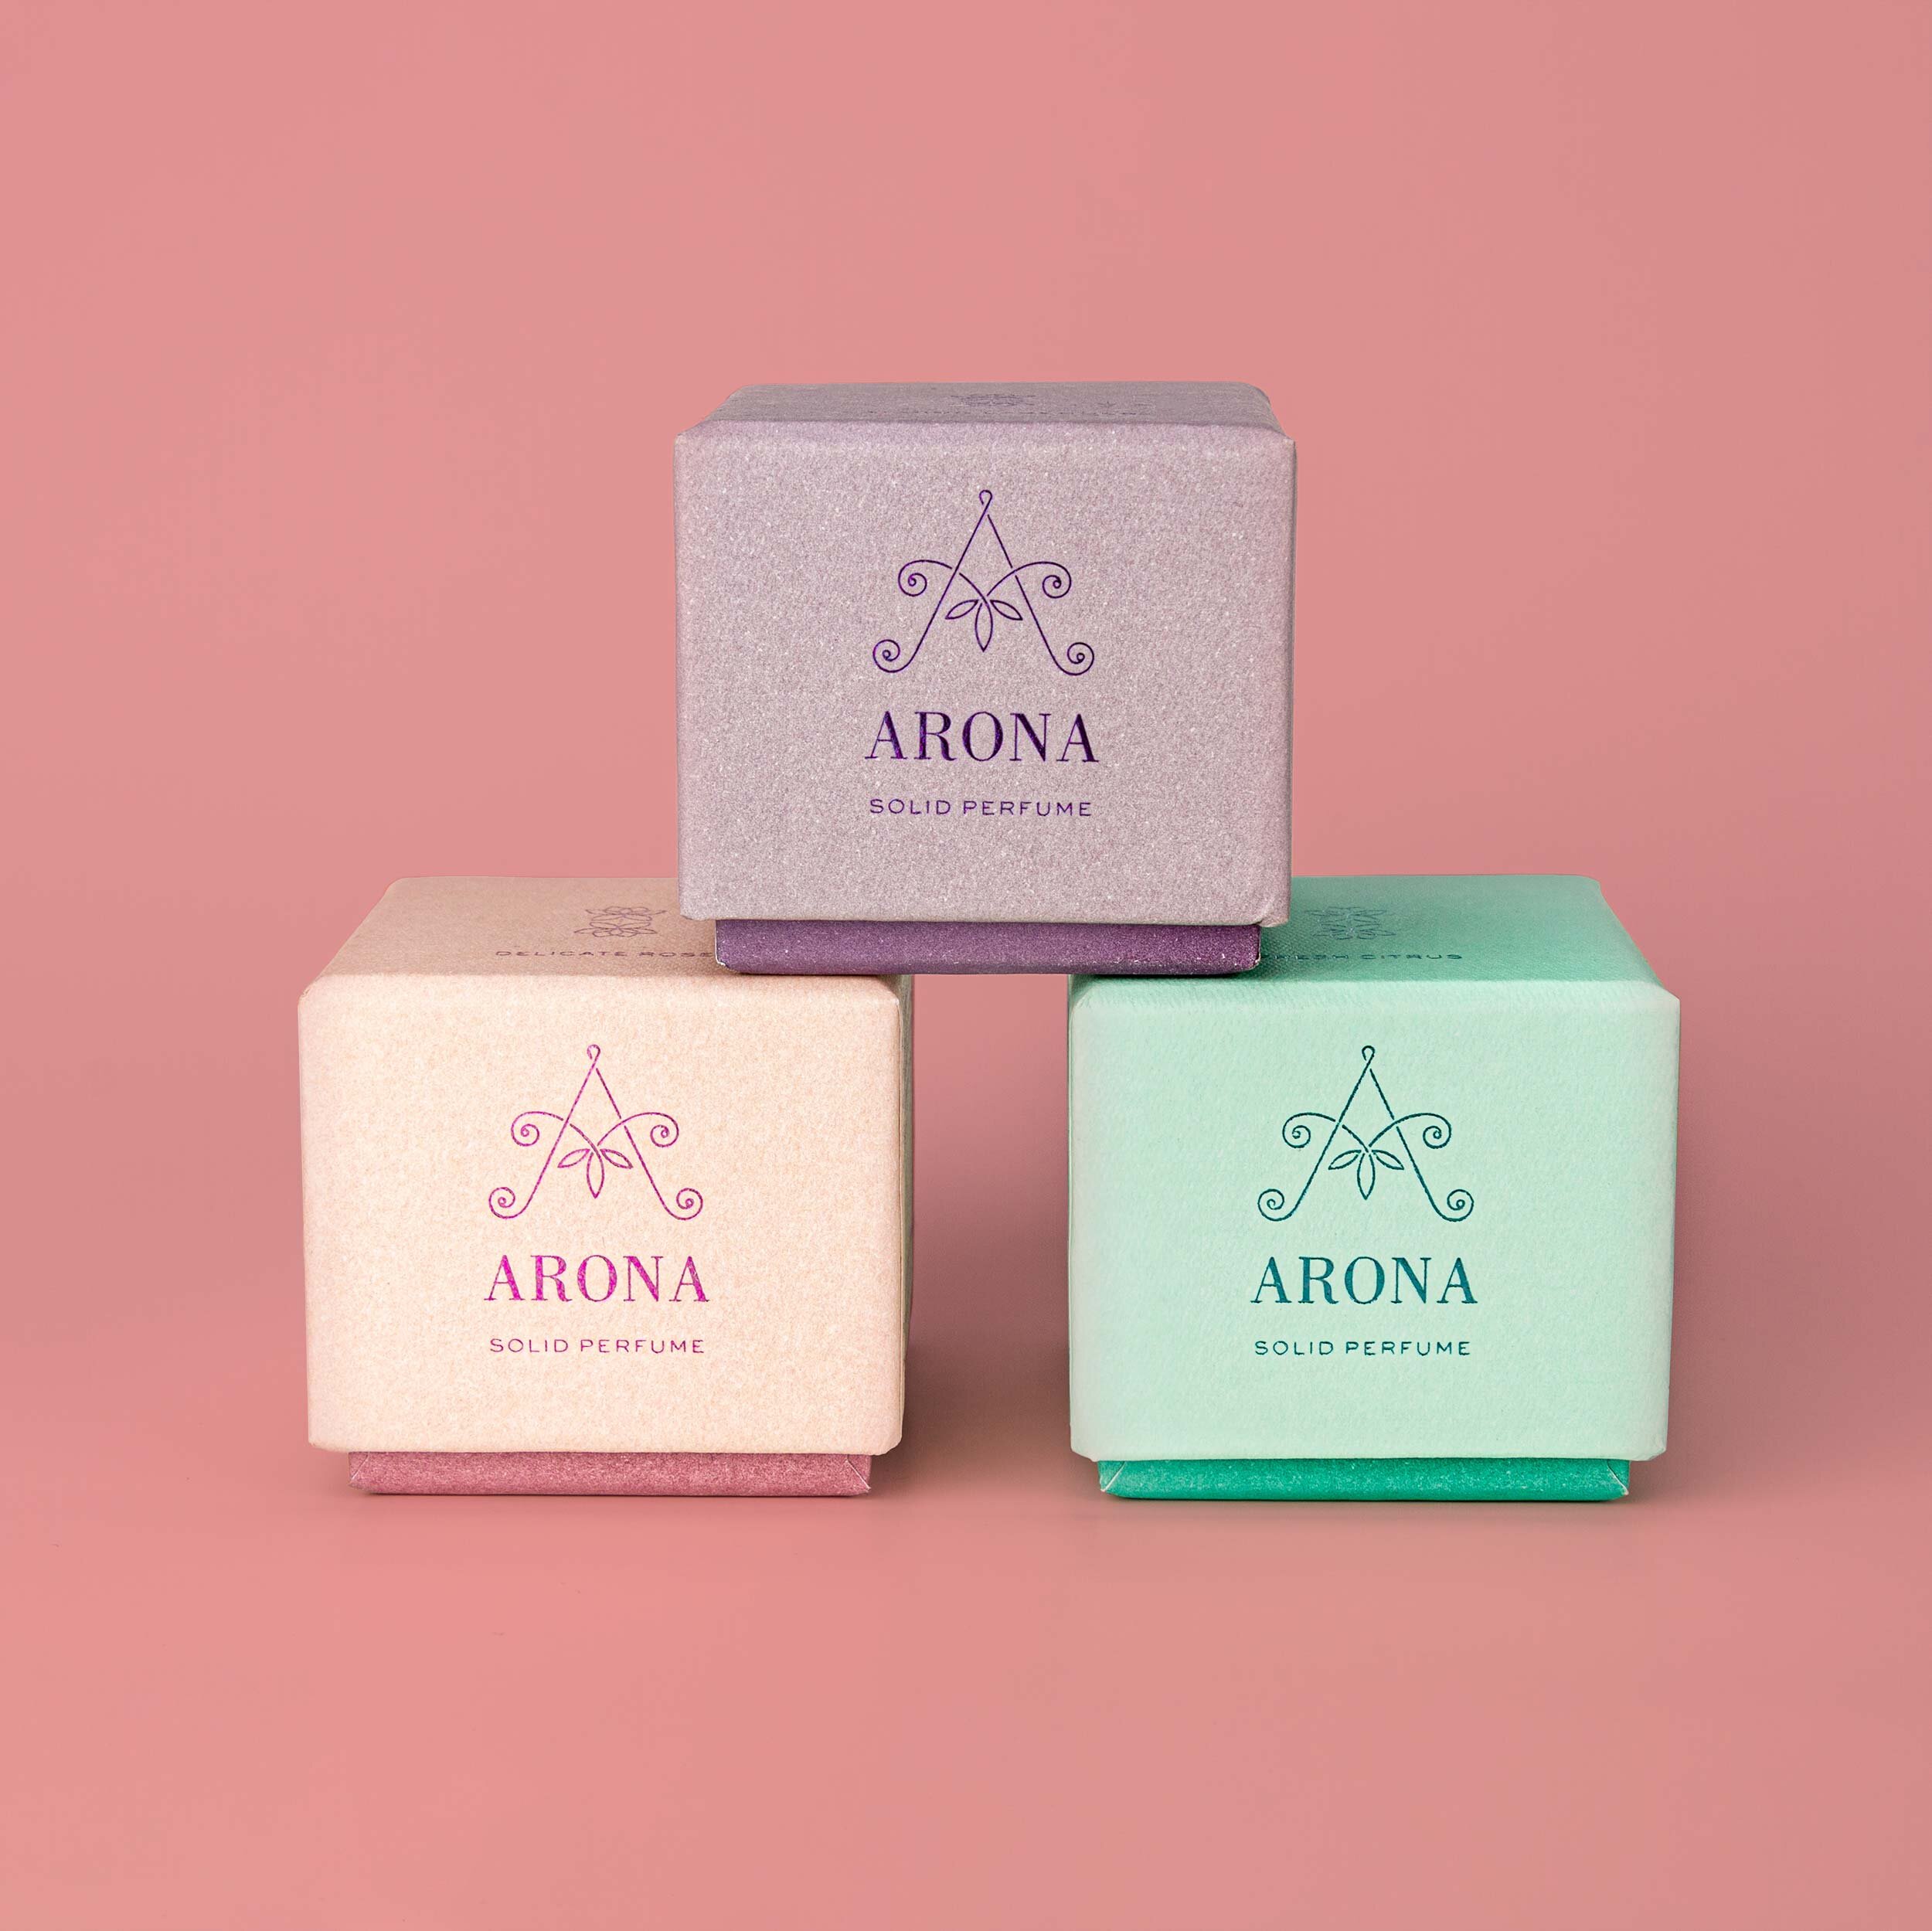 Arona-Premium-Perfume-Packaging-Foiled-Rigid-Box.jpg